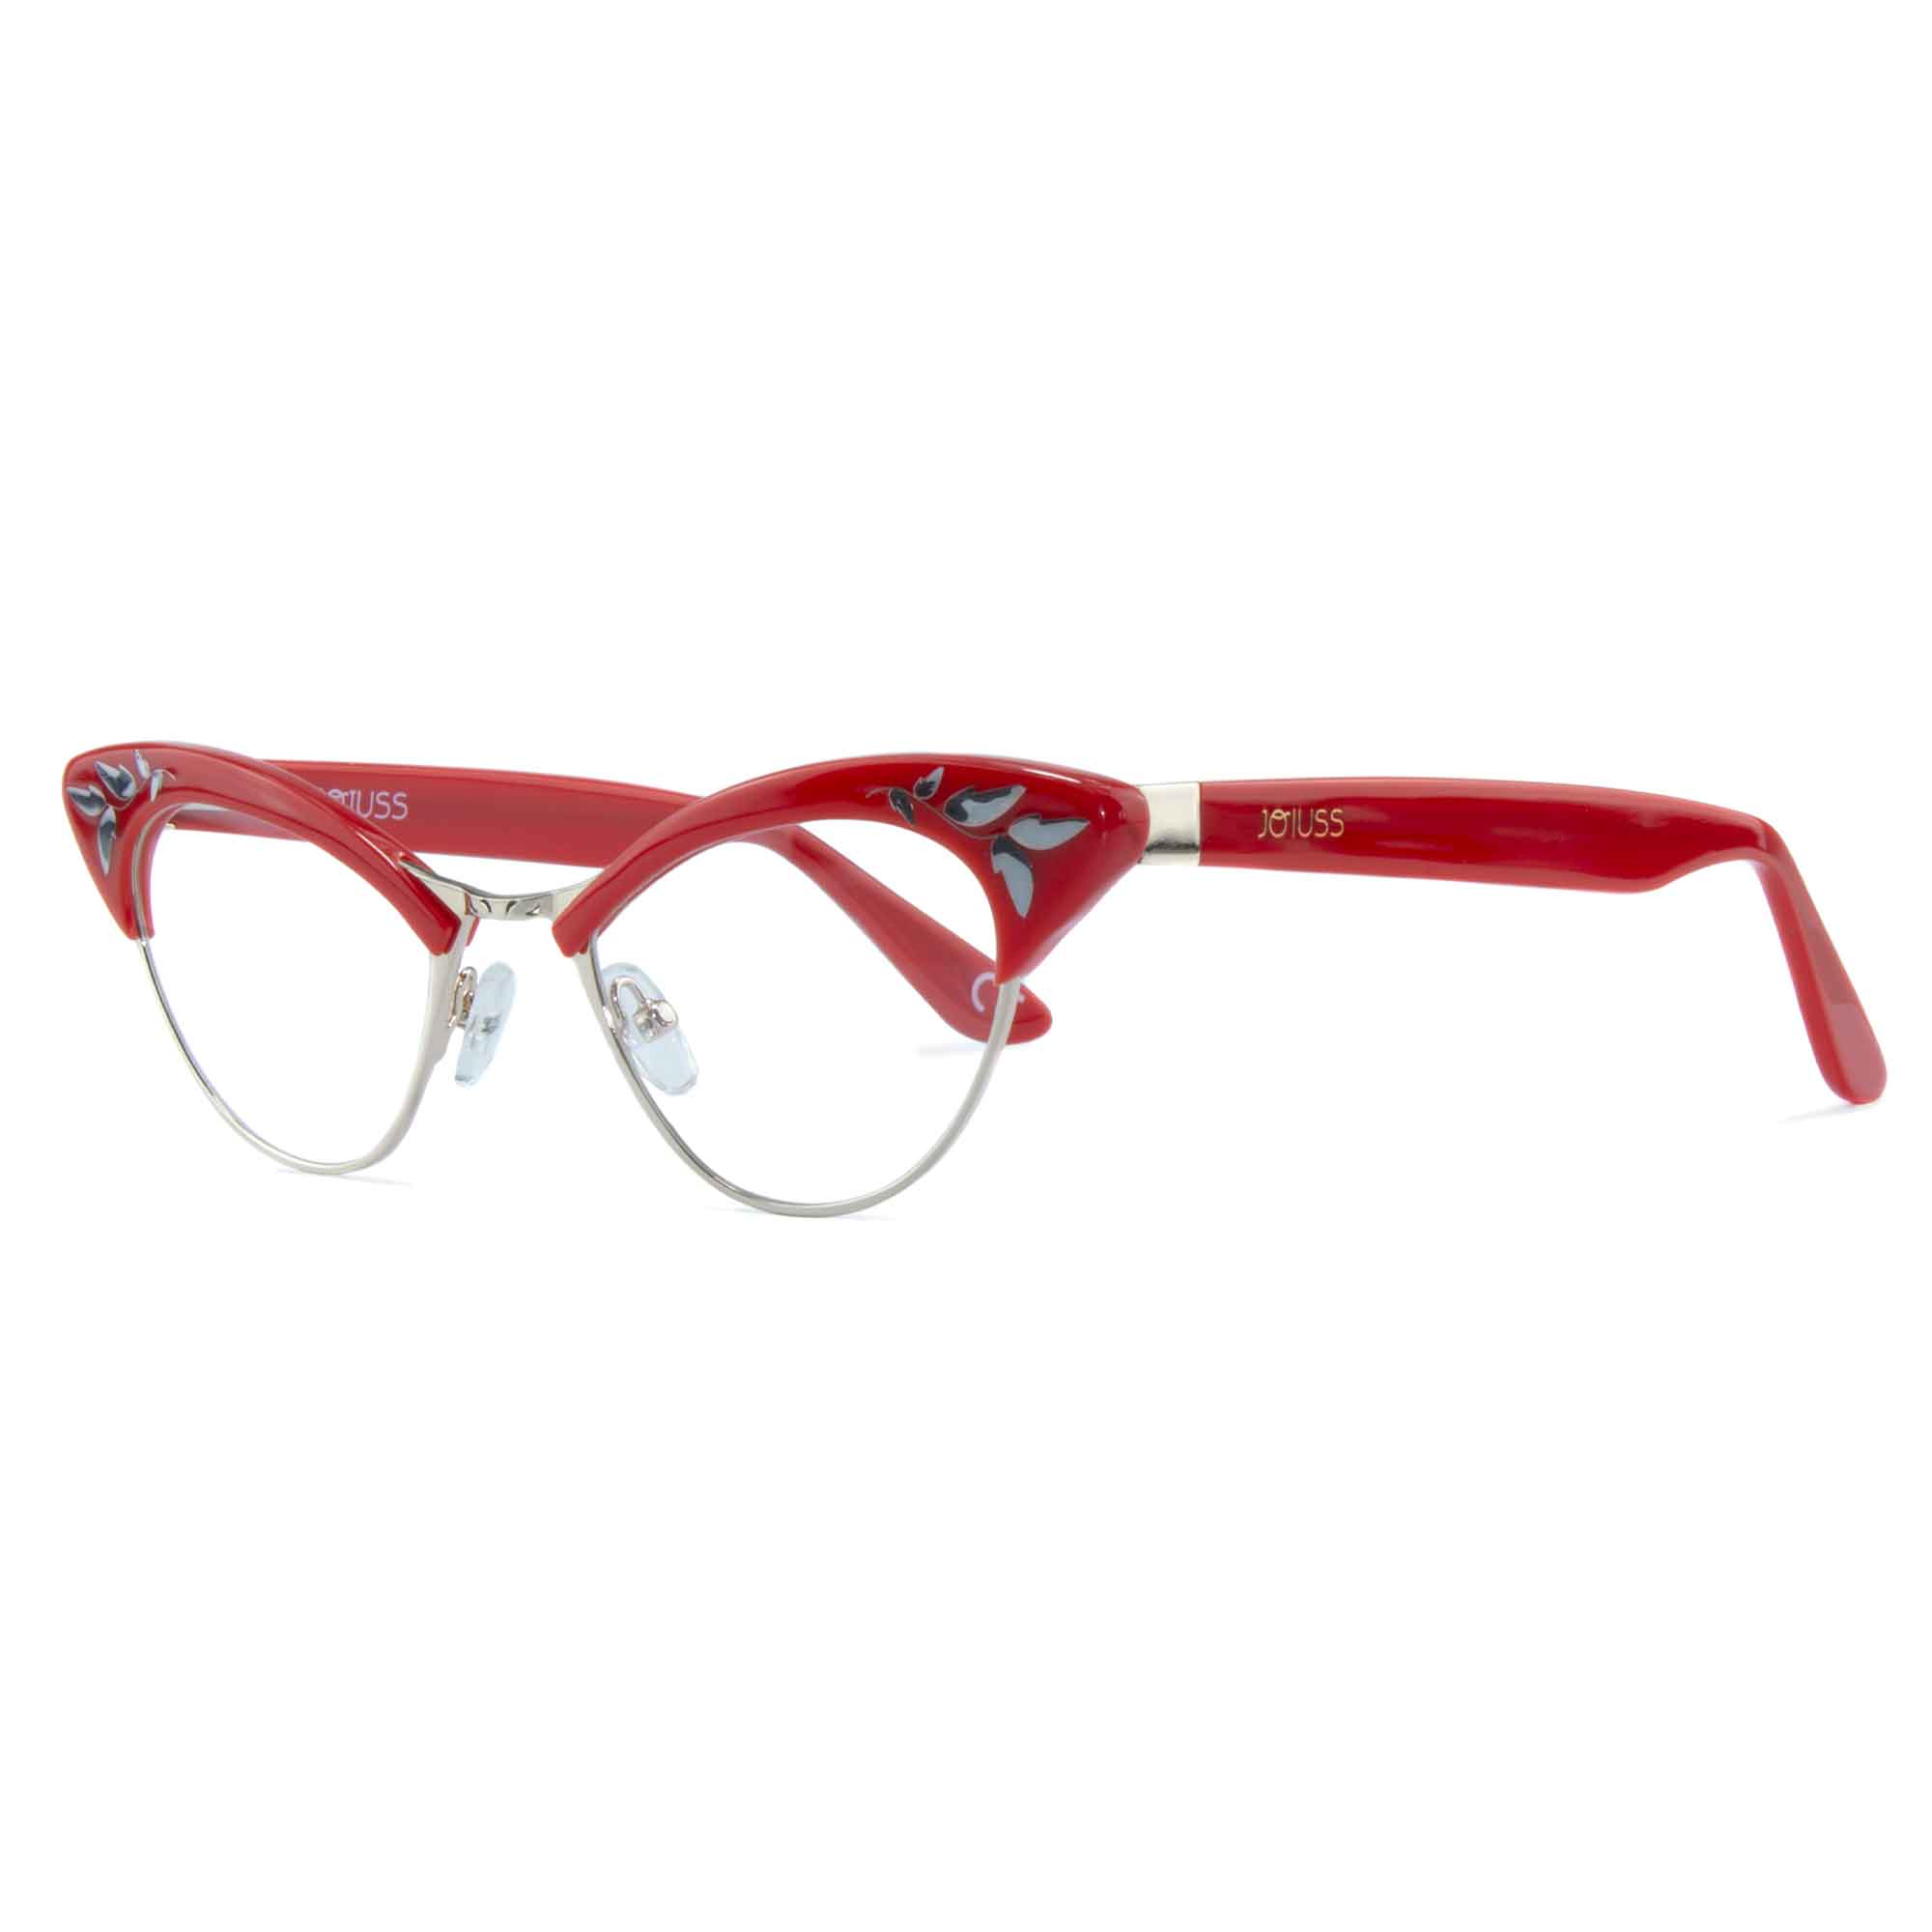 Cat Eye Glasses - Red & Gold - Rita